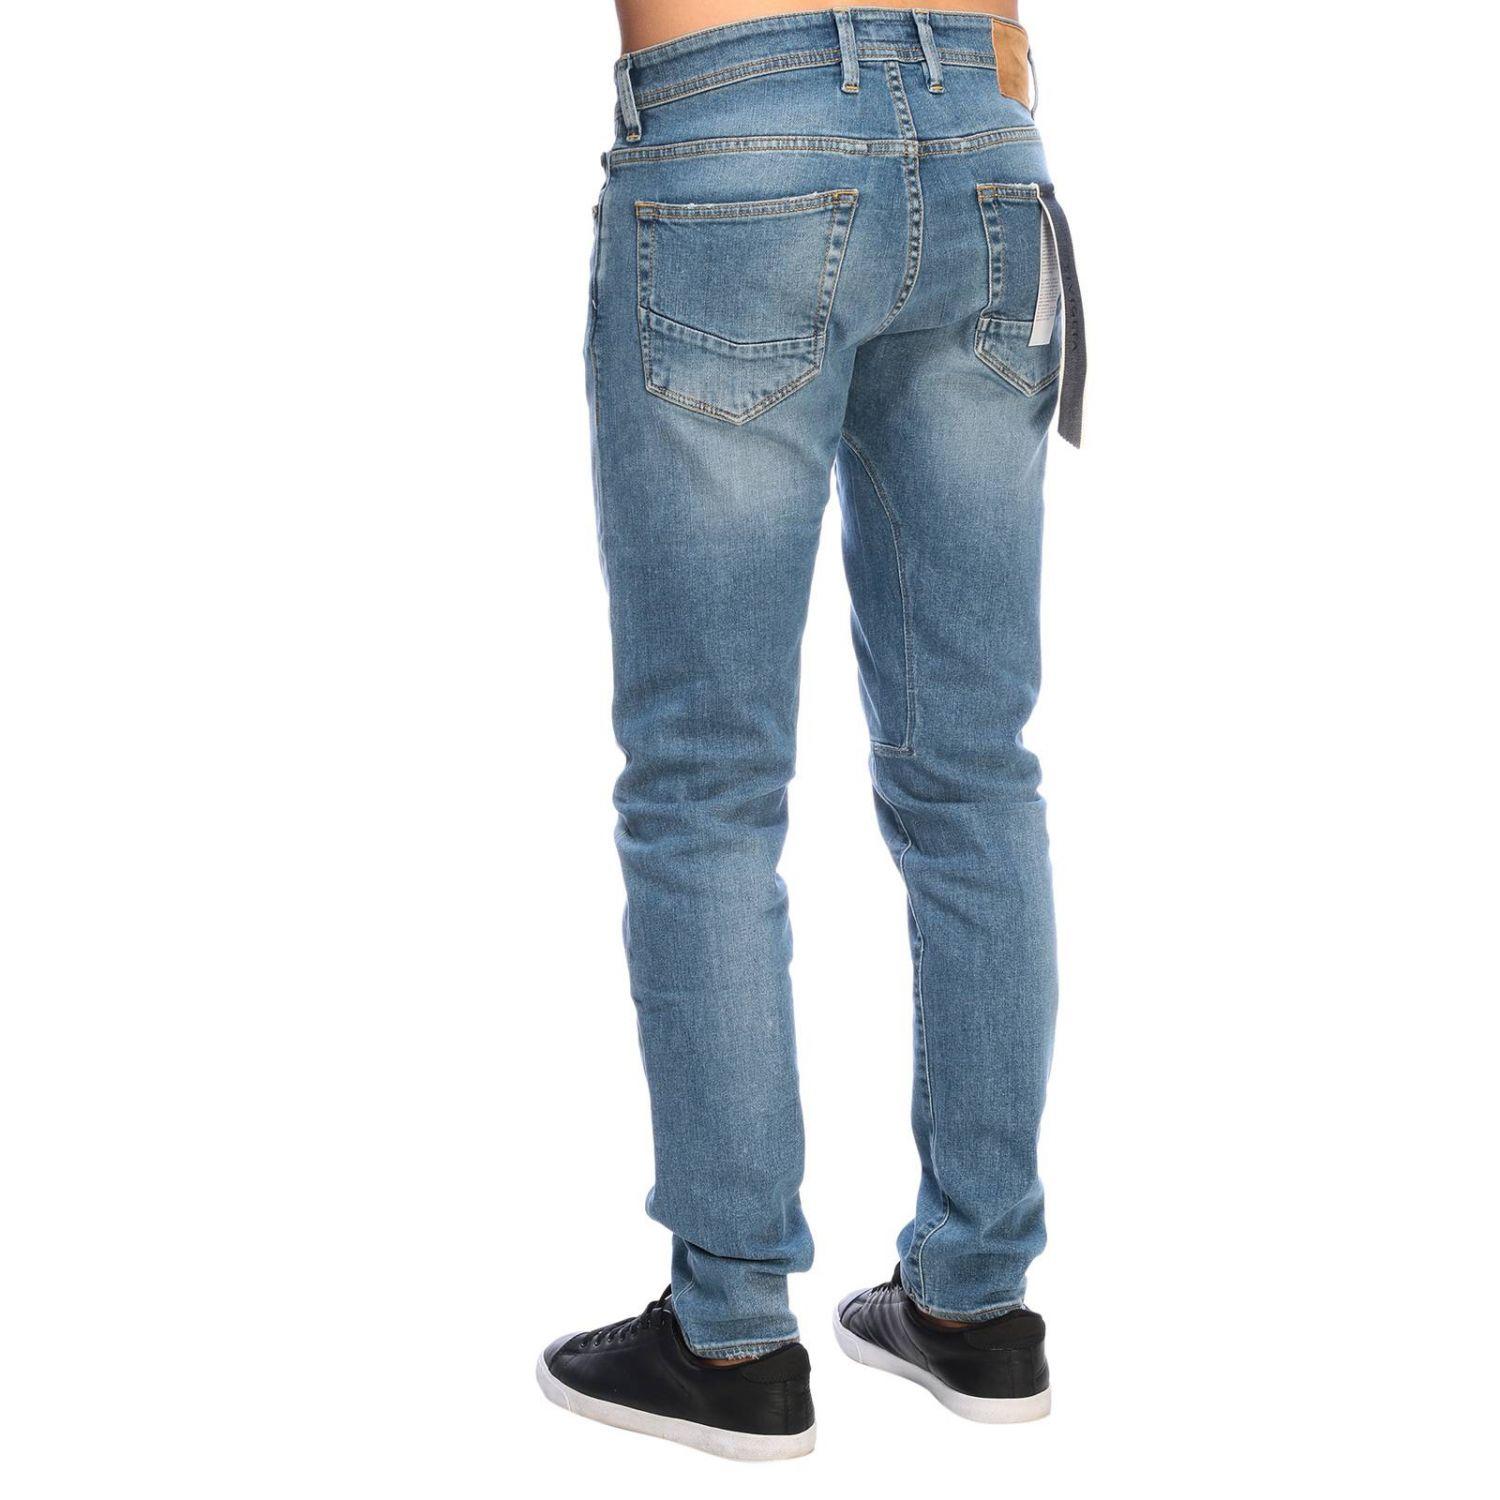 Siviglia Denim Men's Jeans in Stone Washed (Blue) for Men - Lyst